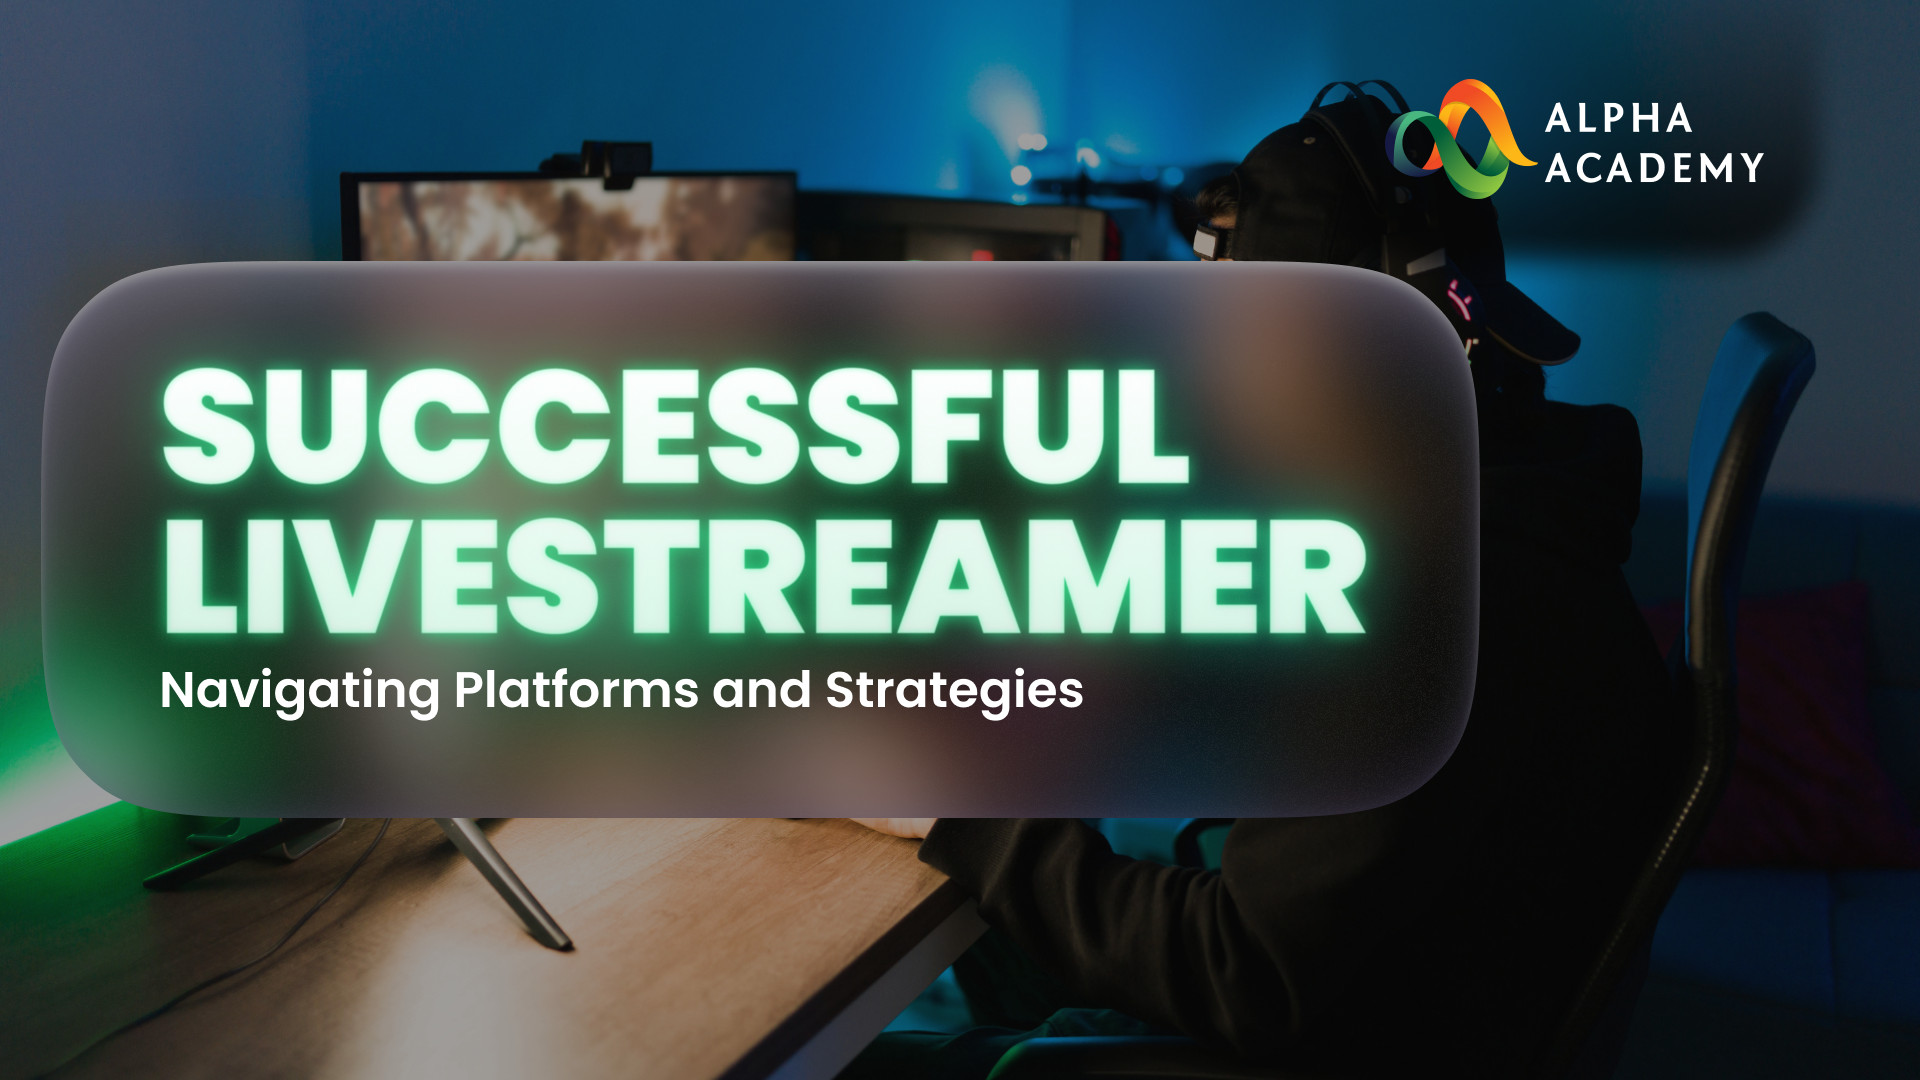 Successful Live streamer: Navigating Platforms and Strategies eLearning Bundle Alpha Academy Code, $11.28